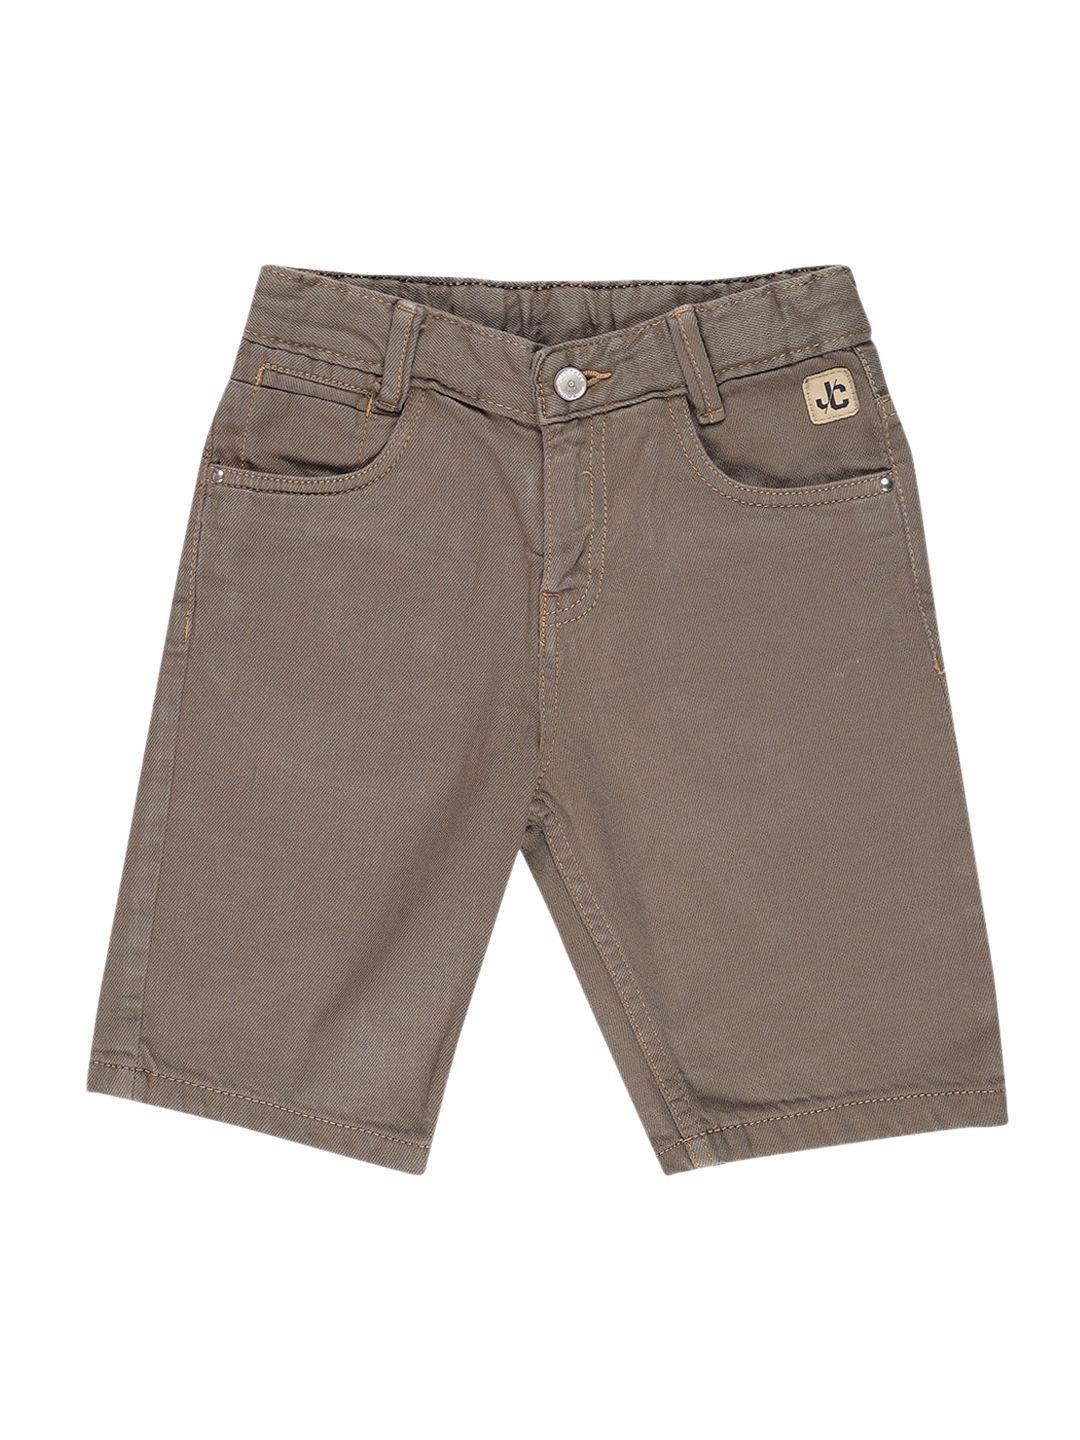 jean cafe boys green slim fit denim shorts 98% cotton